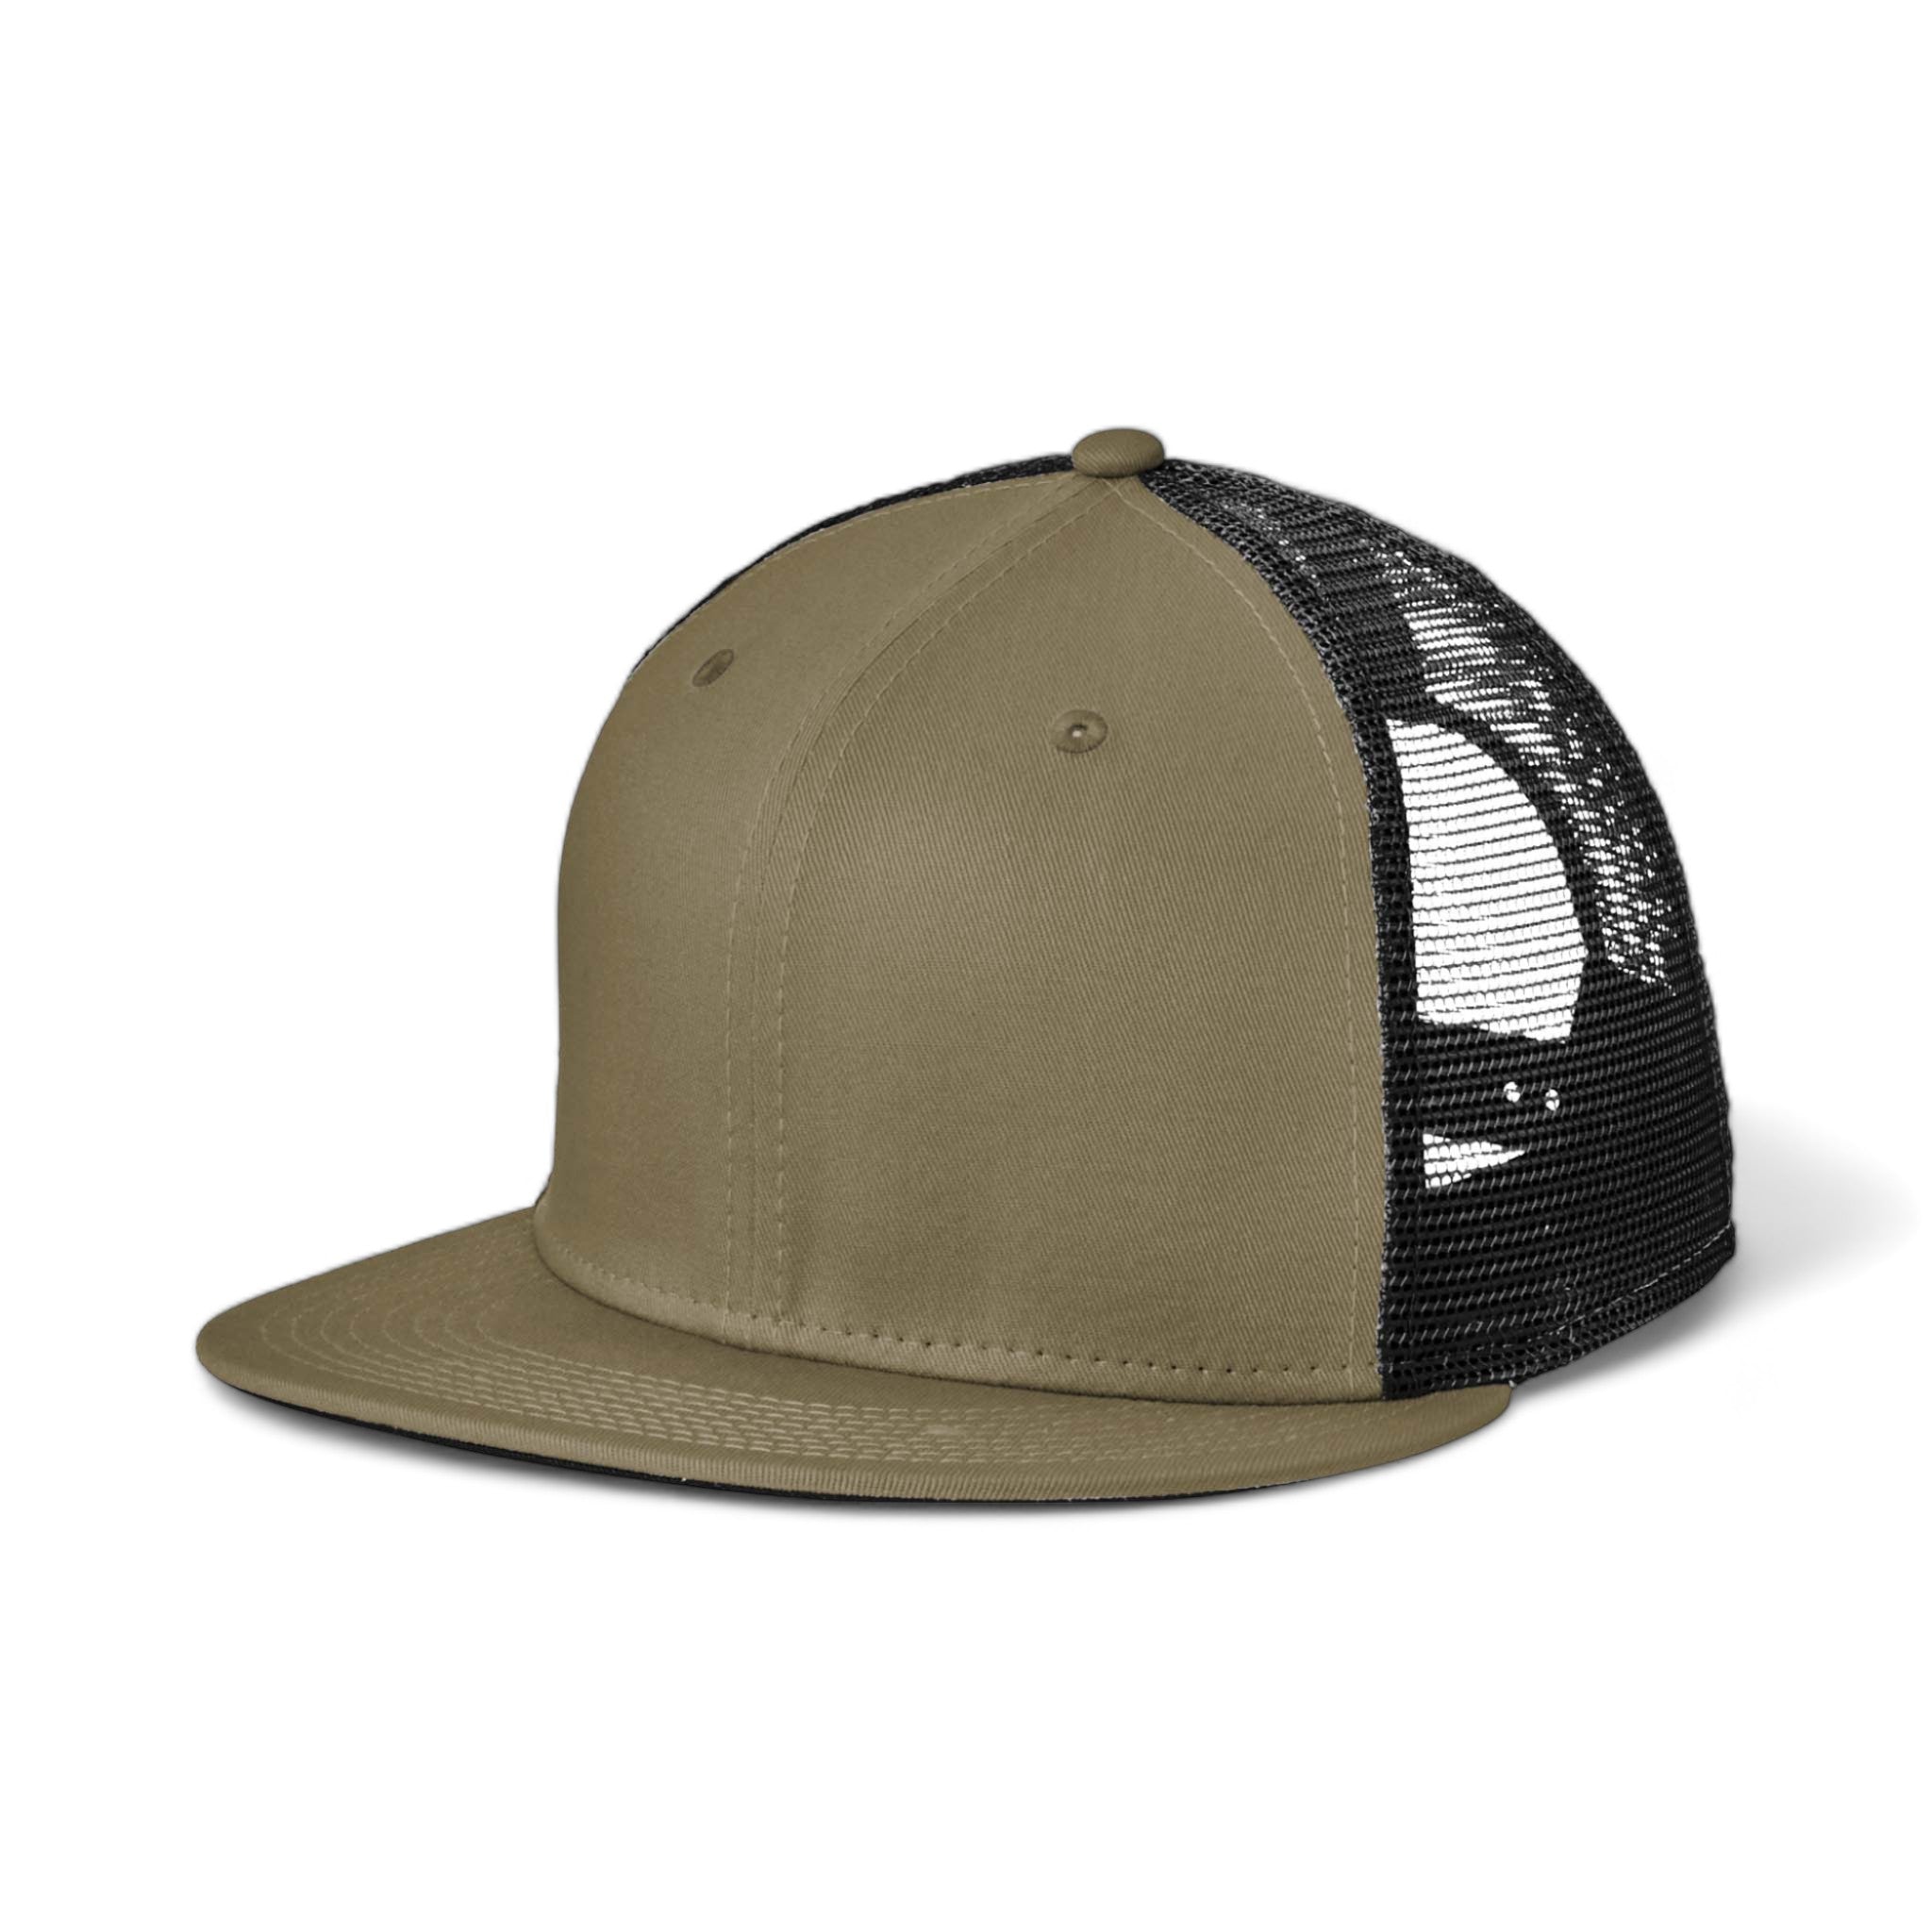 Side view of New Era NE4030 custom hat in olive and black